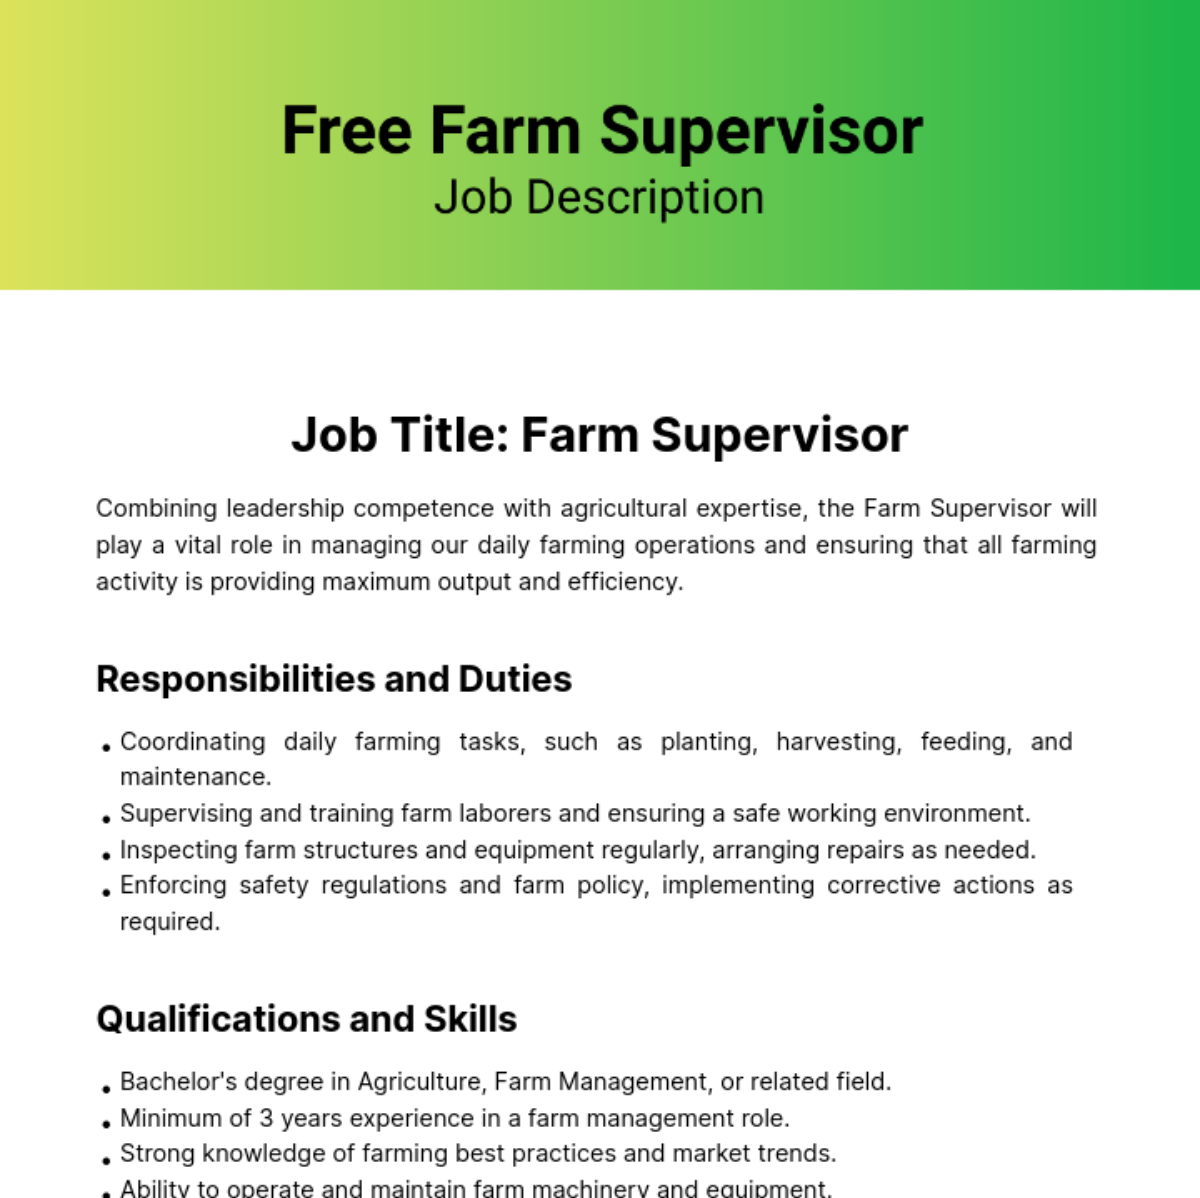 Free Farm Supervisor Job Description Template